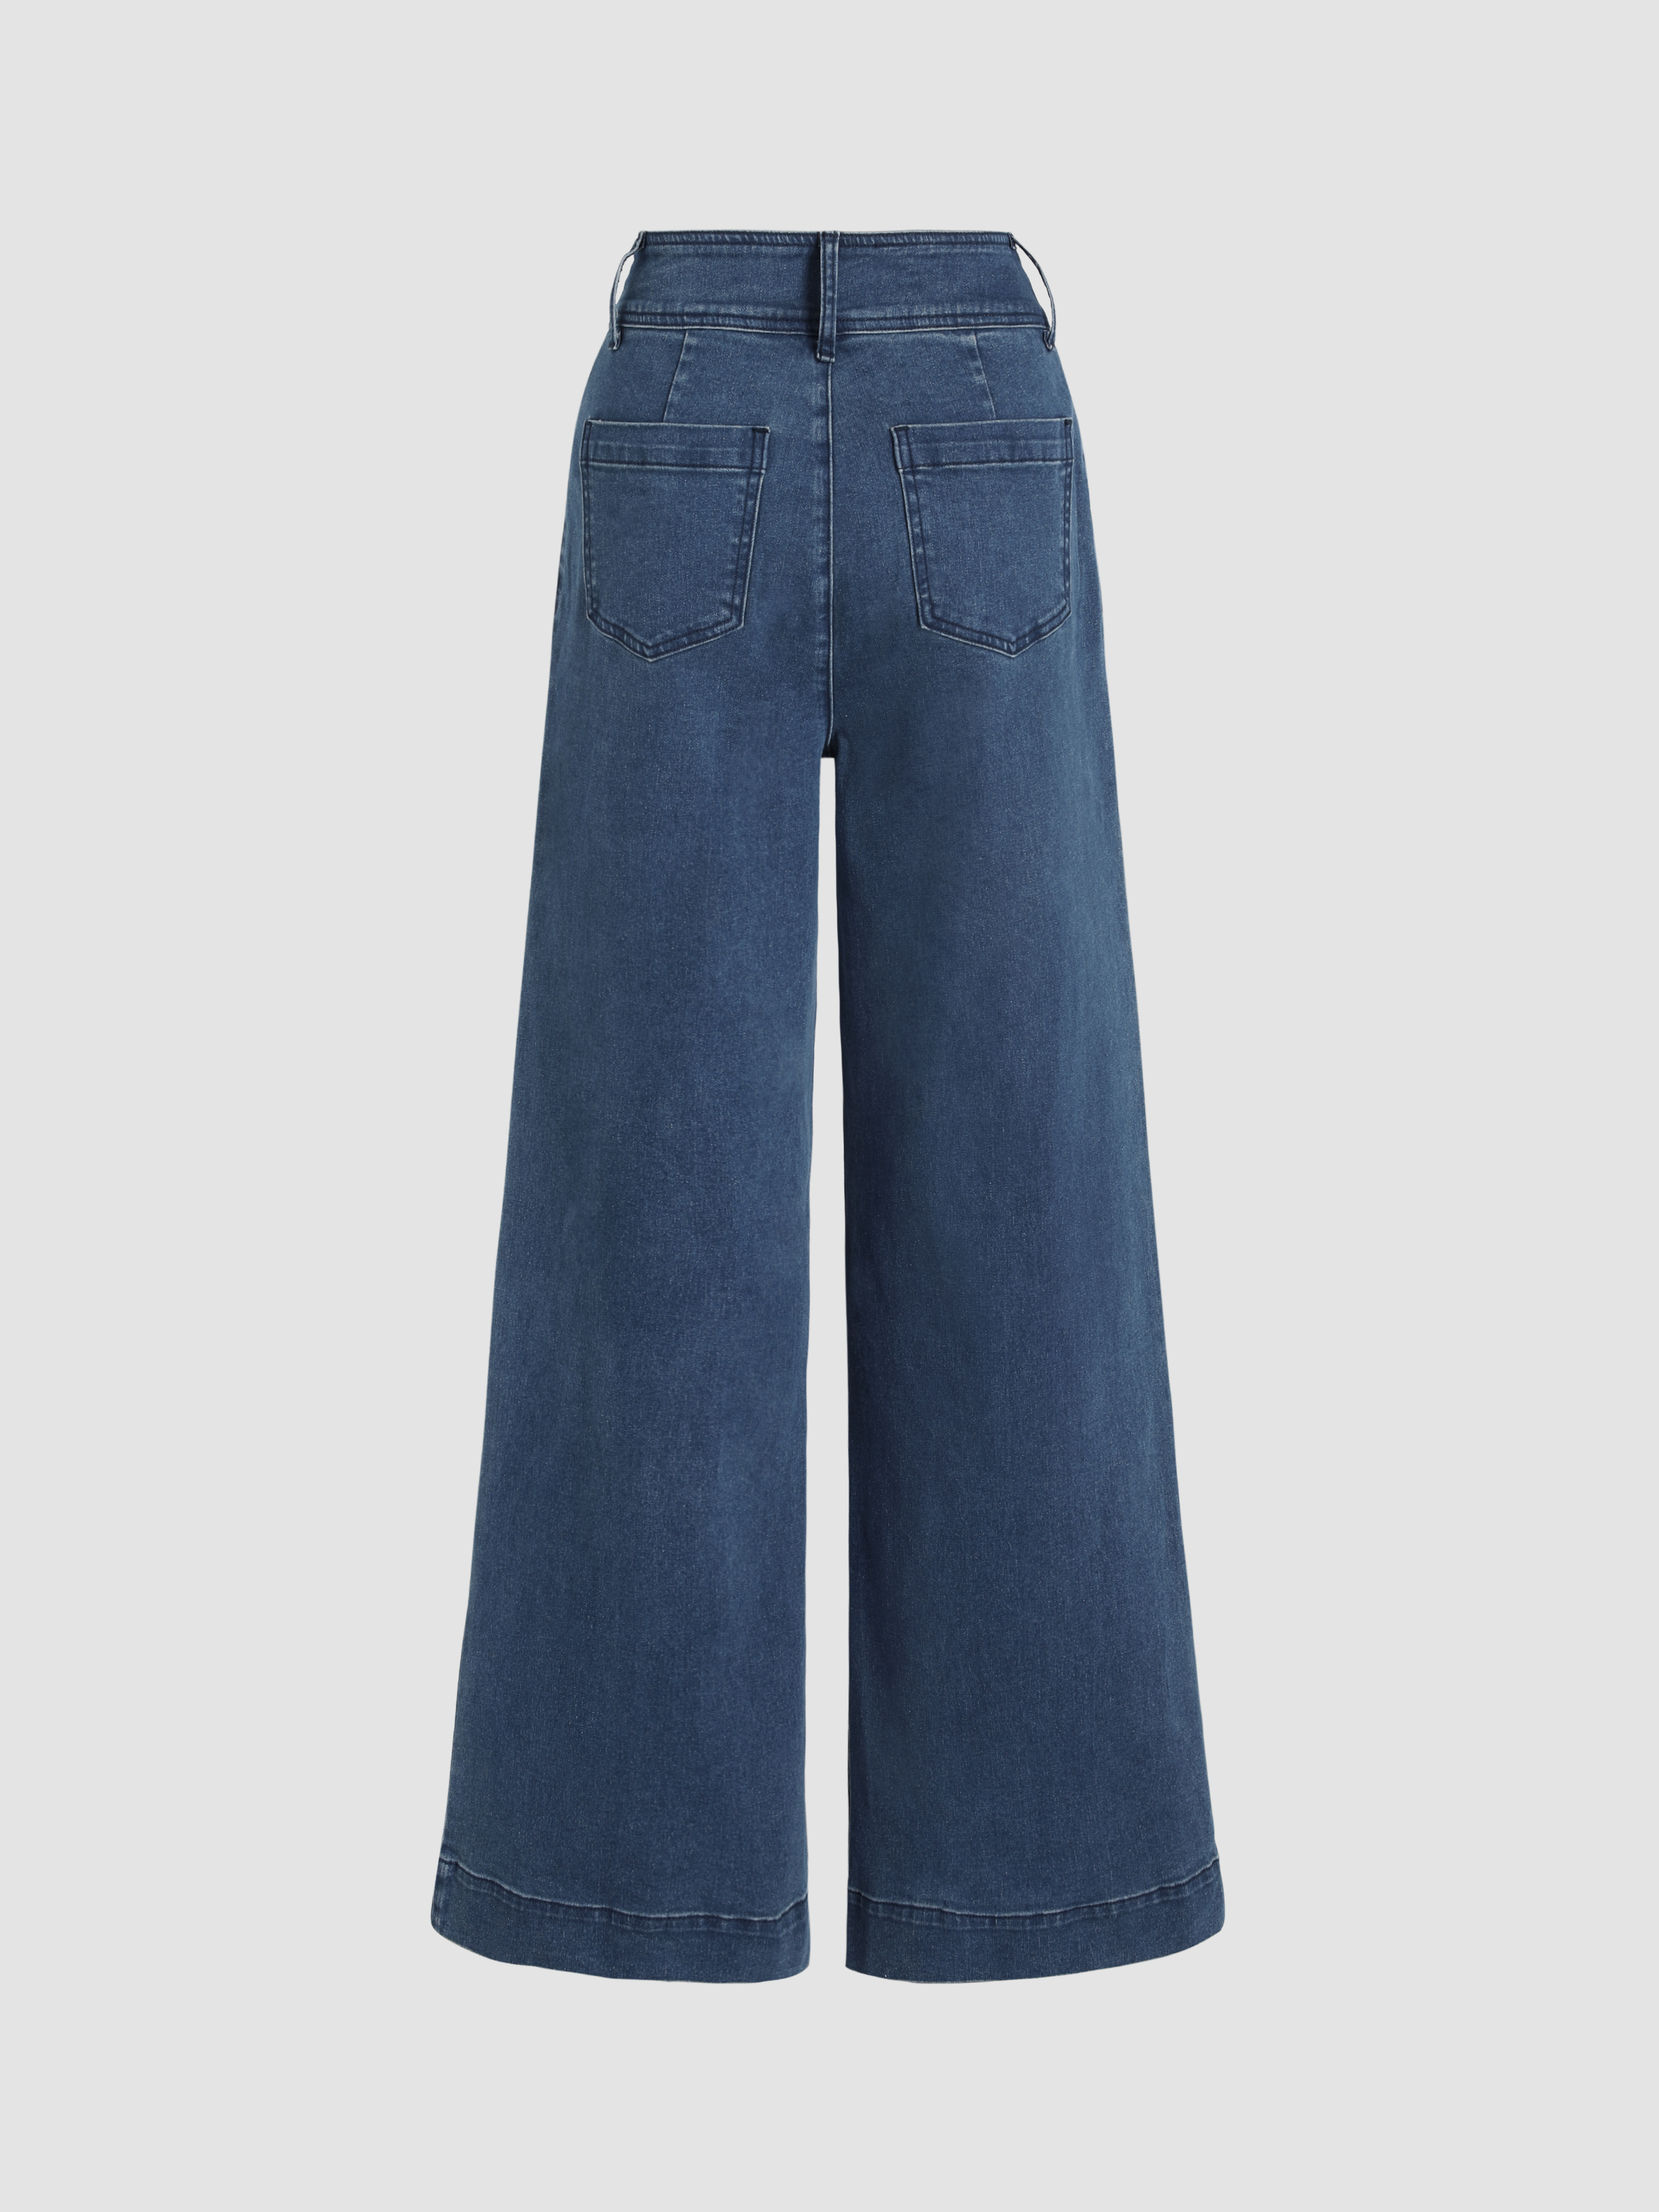 SMihono Women's Fashion Denim Button Zipper Solid High Waist Pockets Jean  Wide Leg Pants Flare Trousers Oversized Full Length Pants for Teen Girls